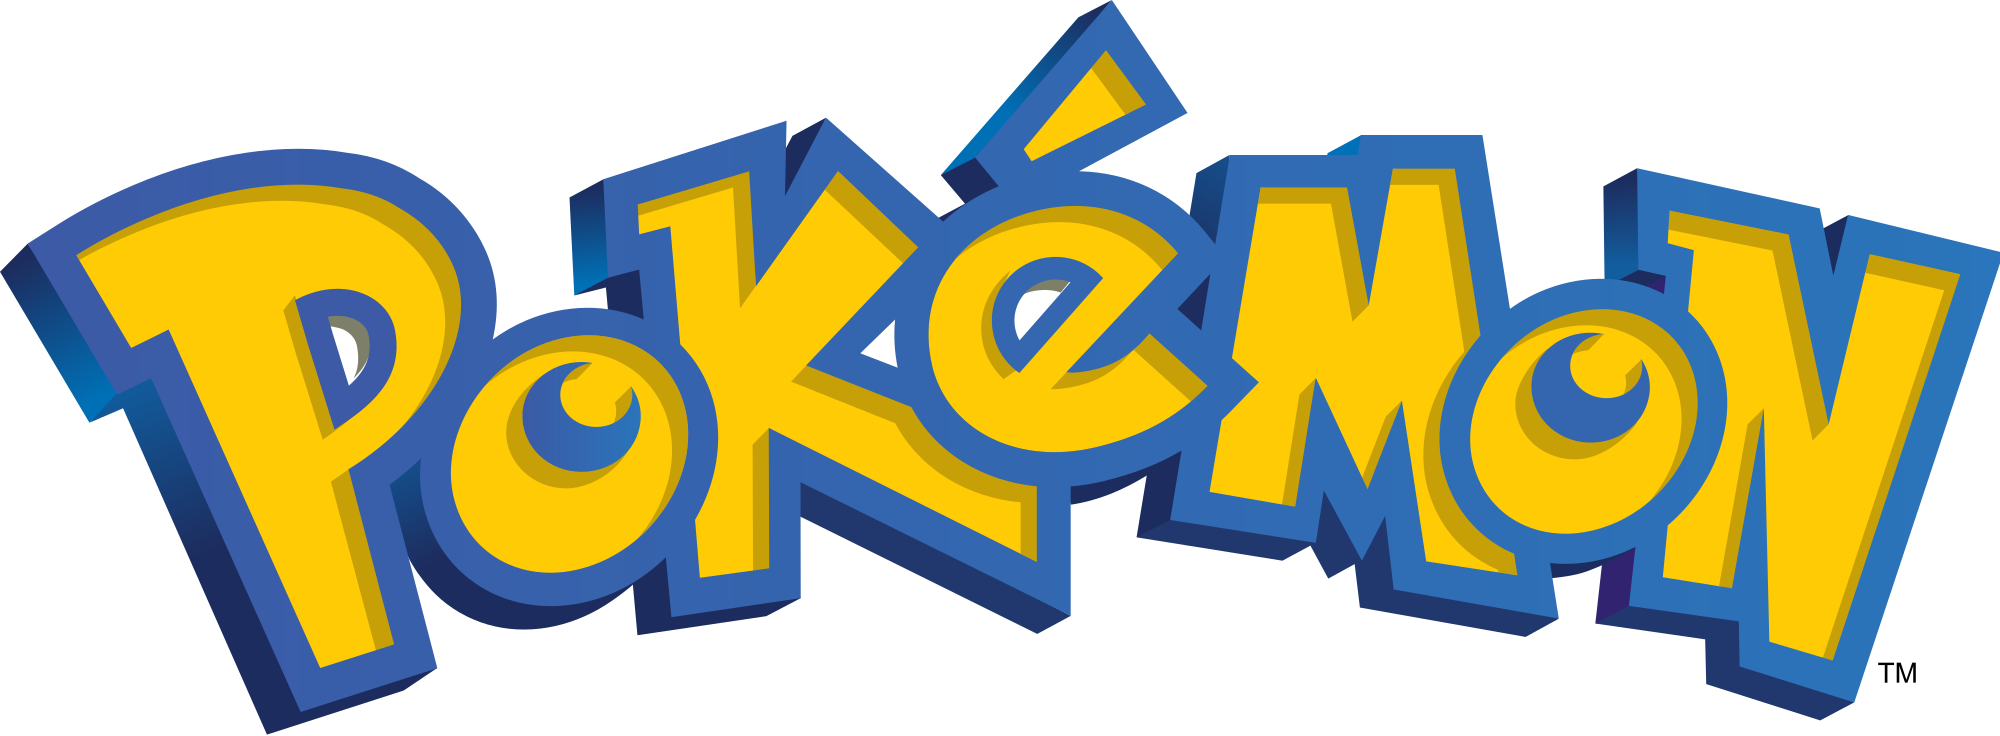 Pokemon Logo Svg Png